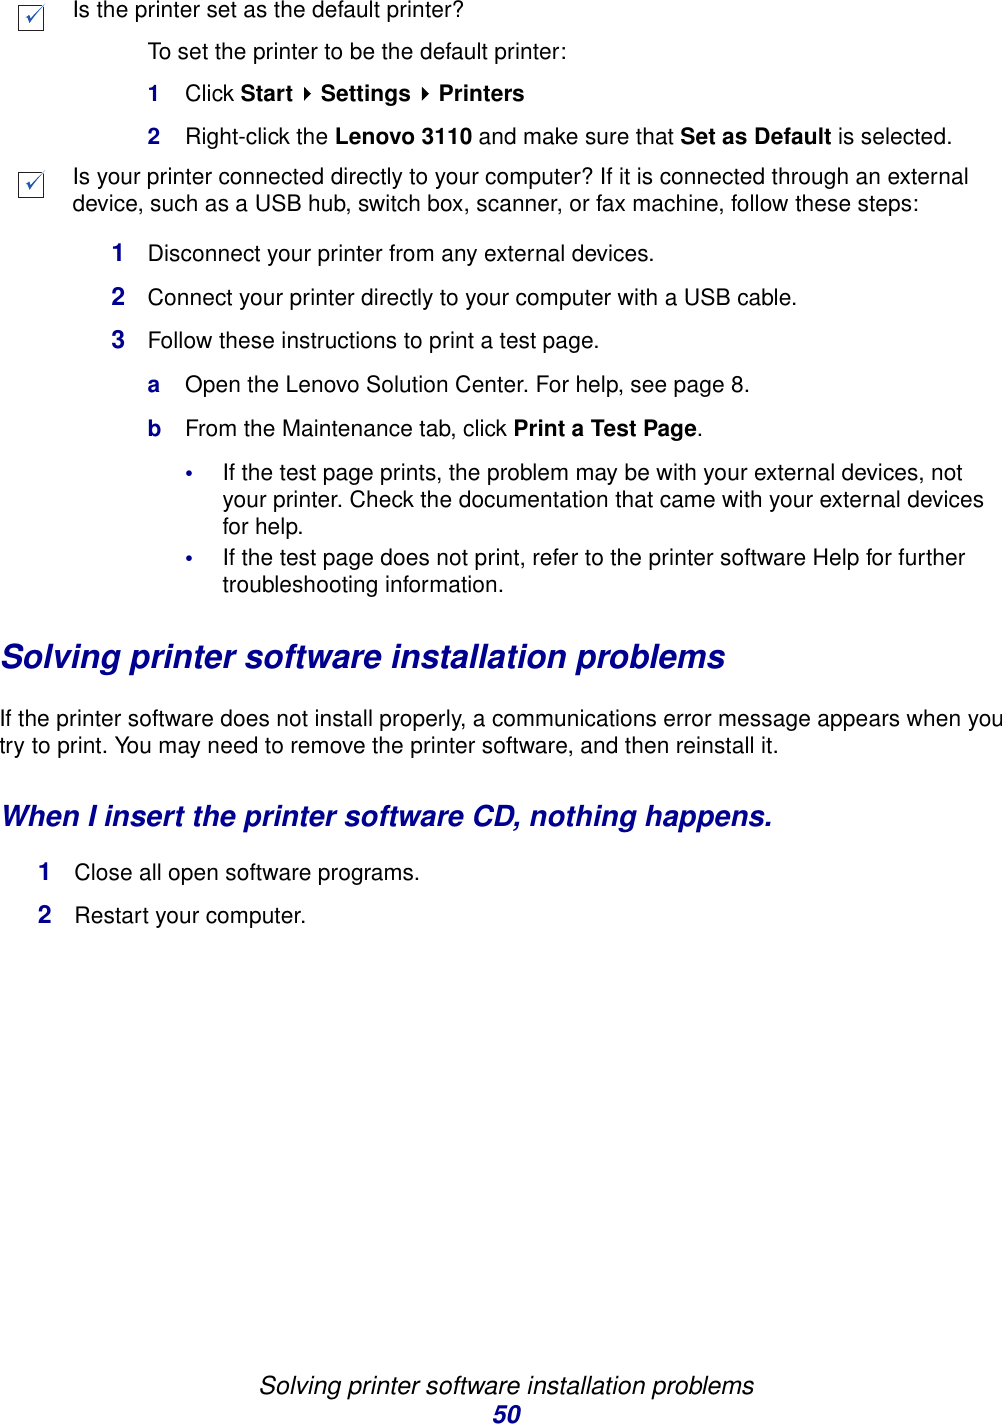 lenovo printer driver error